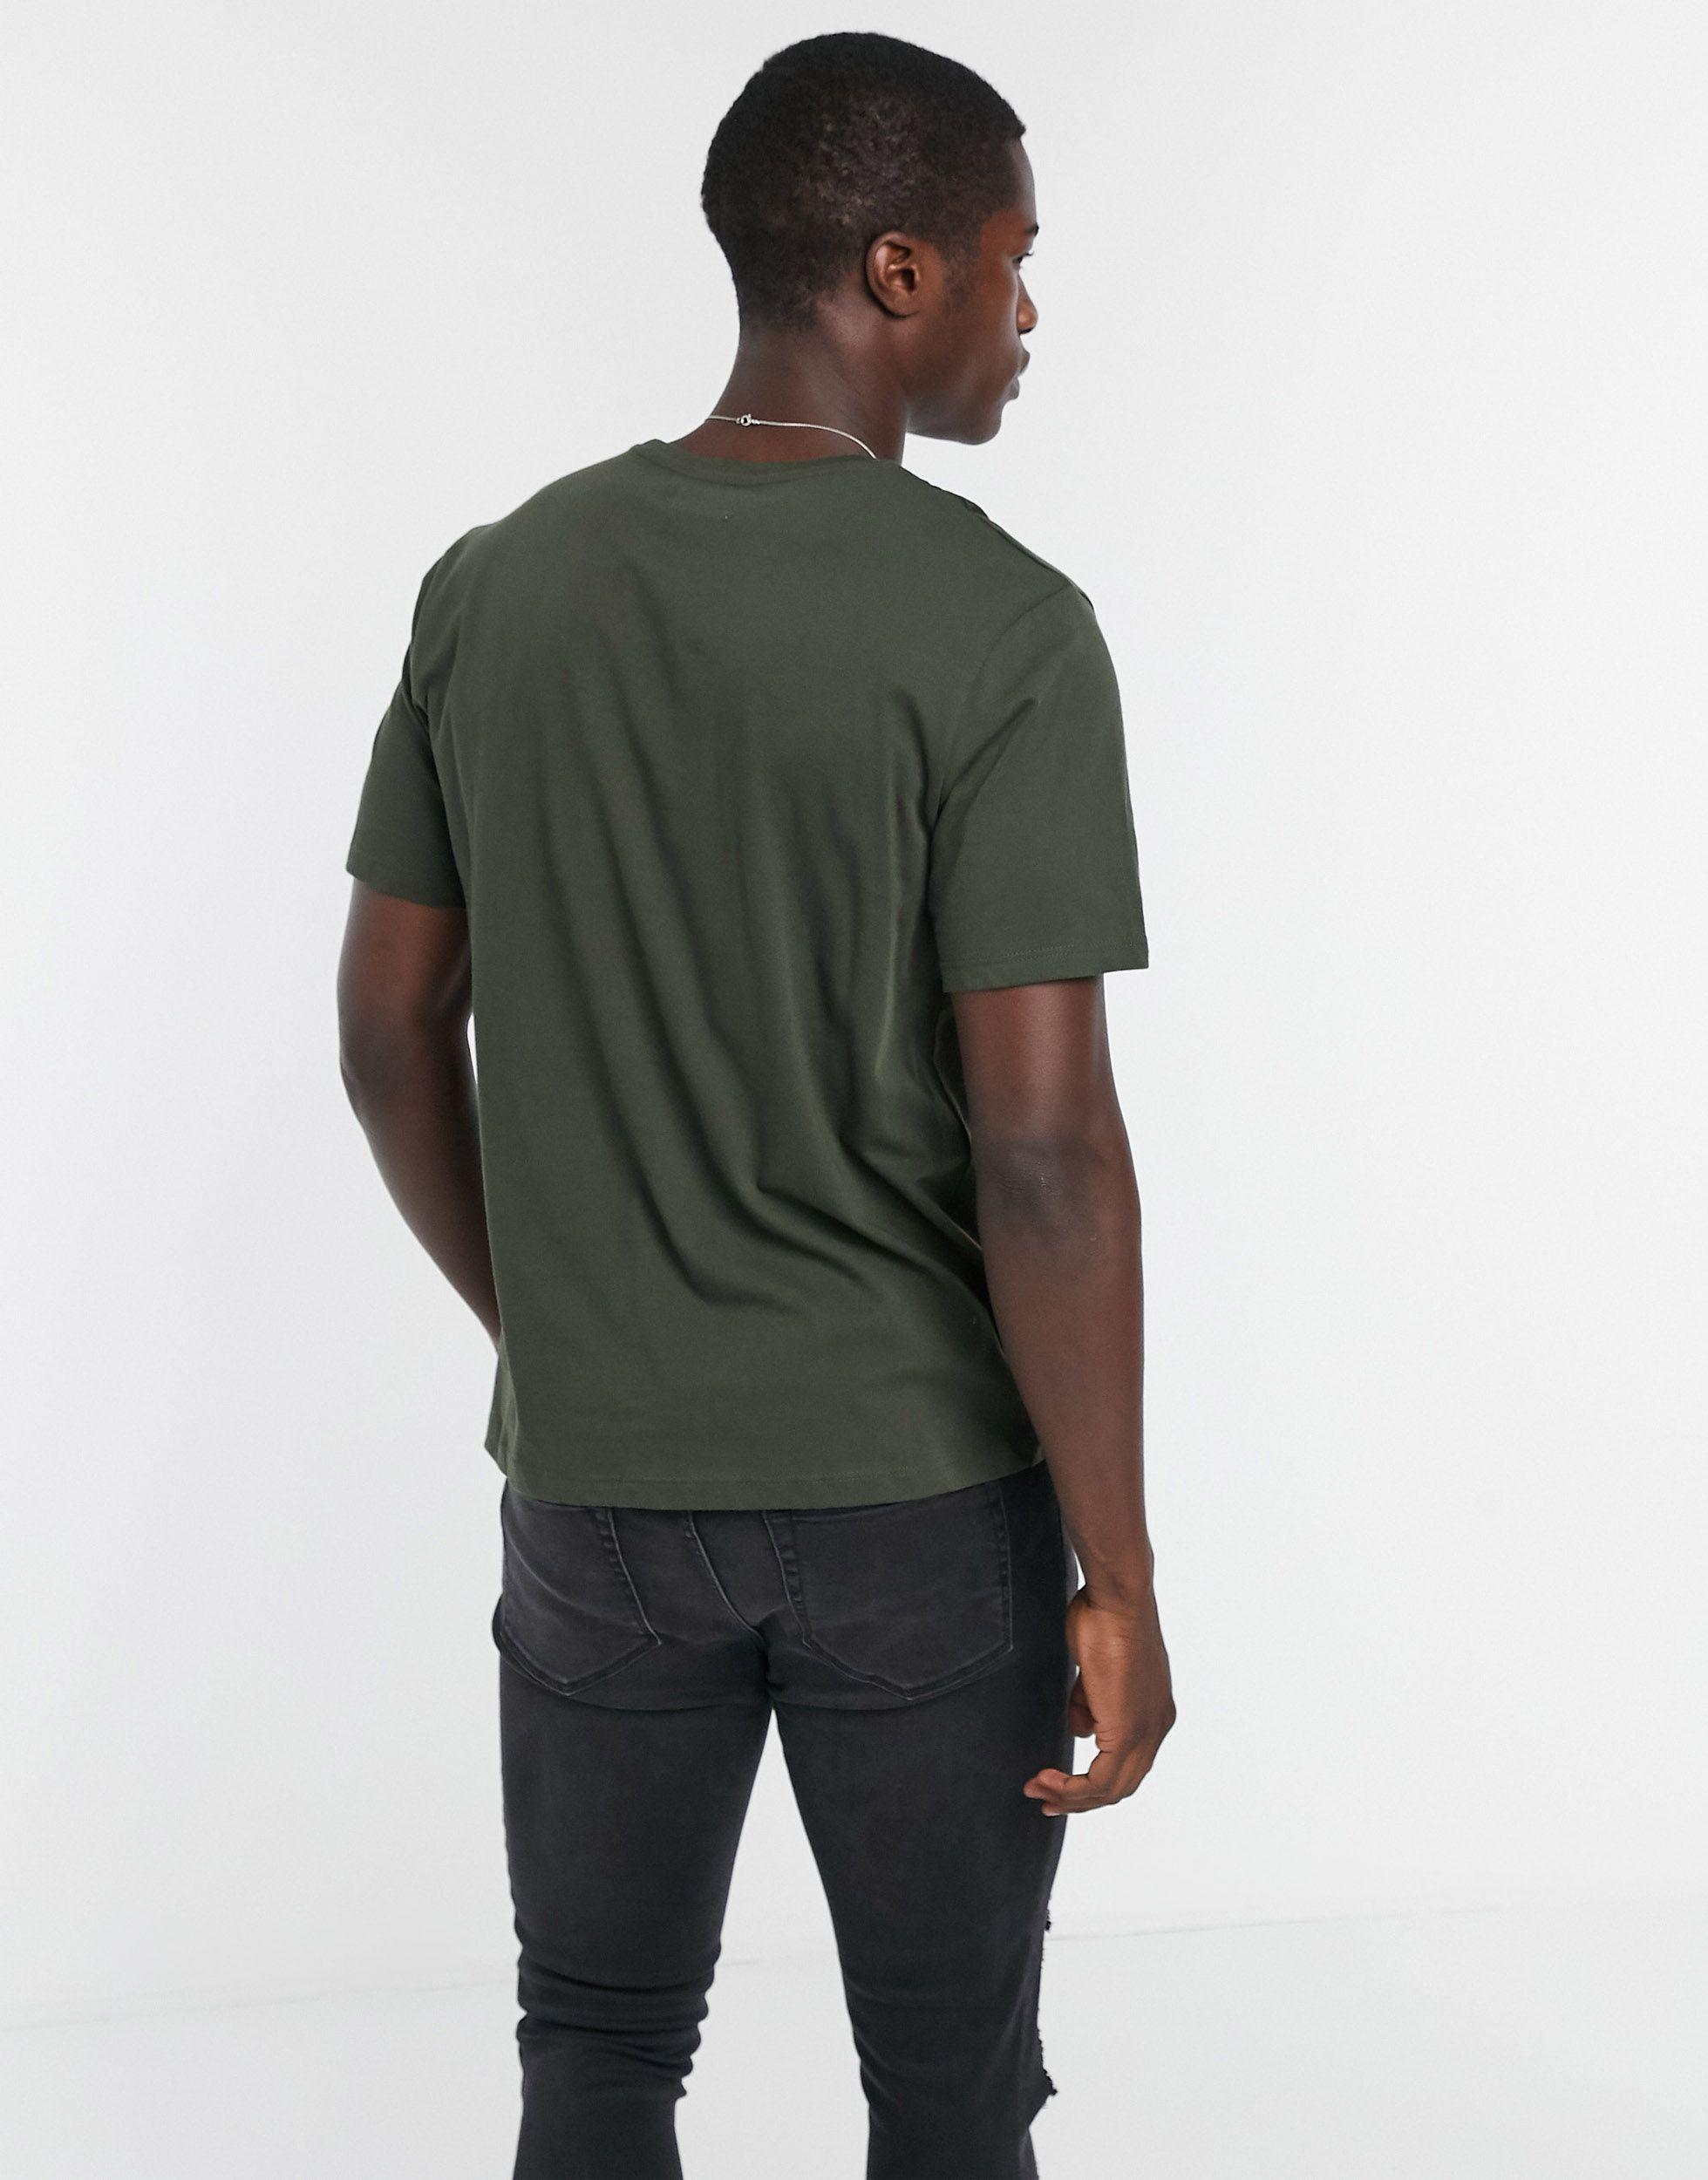 TOPMAN Slim T-shirt in Green for Men - Lyst